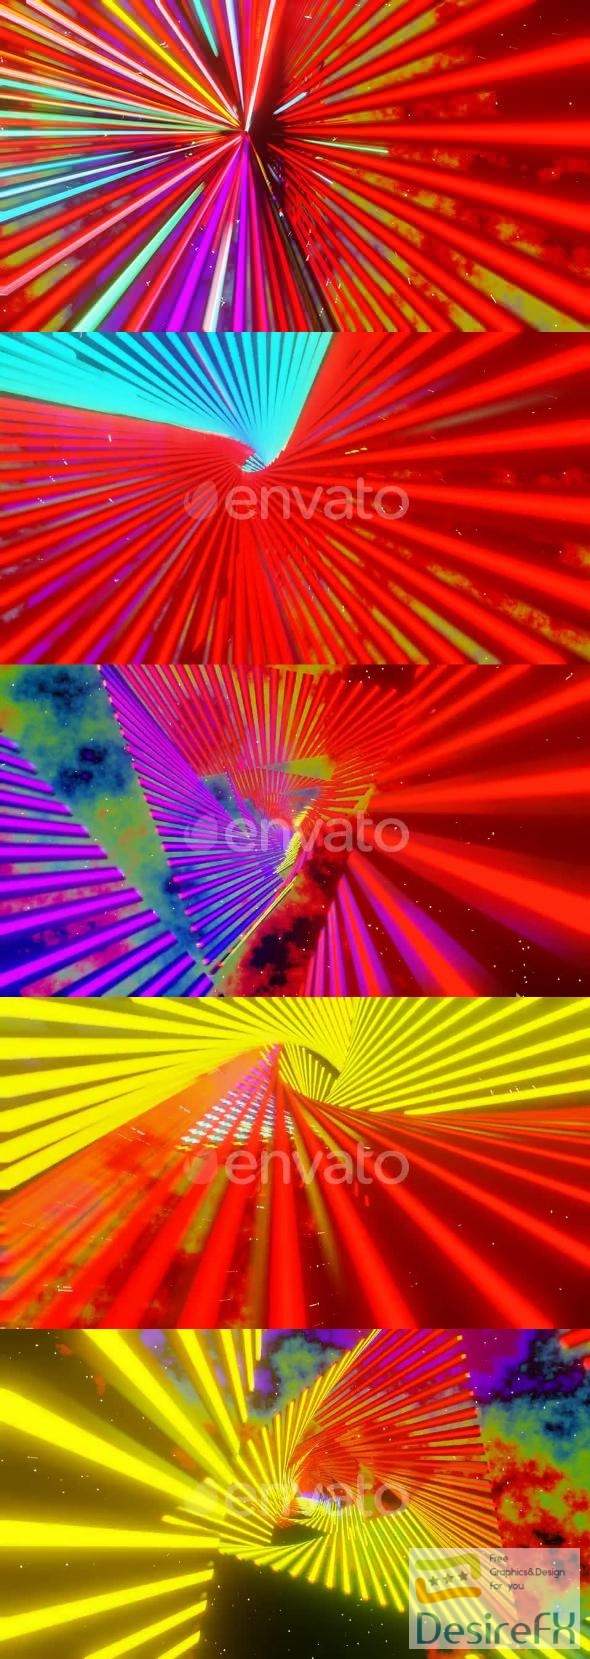 VideoHive Multicolor Neon Glowing Sci-Fi Triangular Dimension Background Vj Loop In HD 47574162